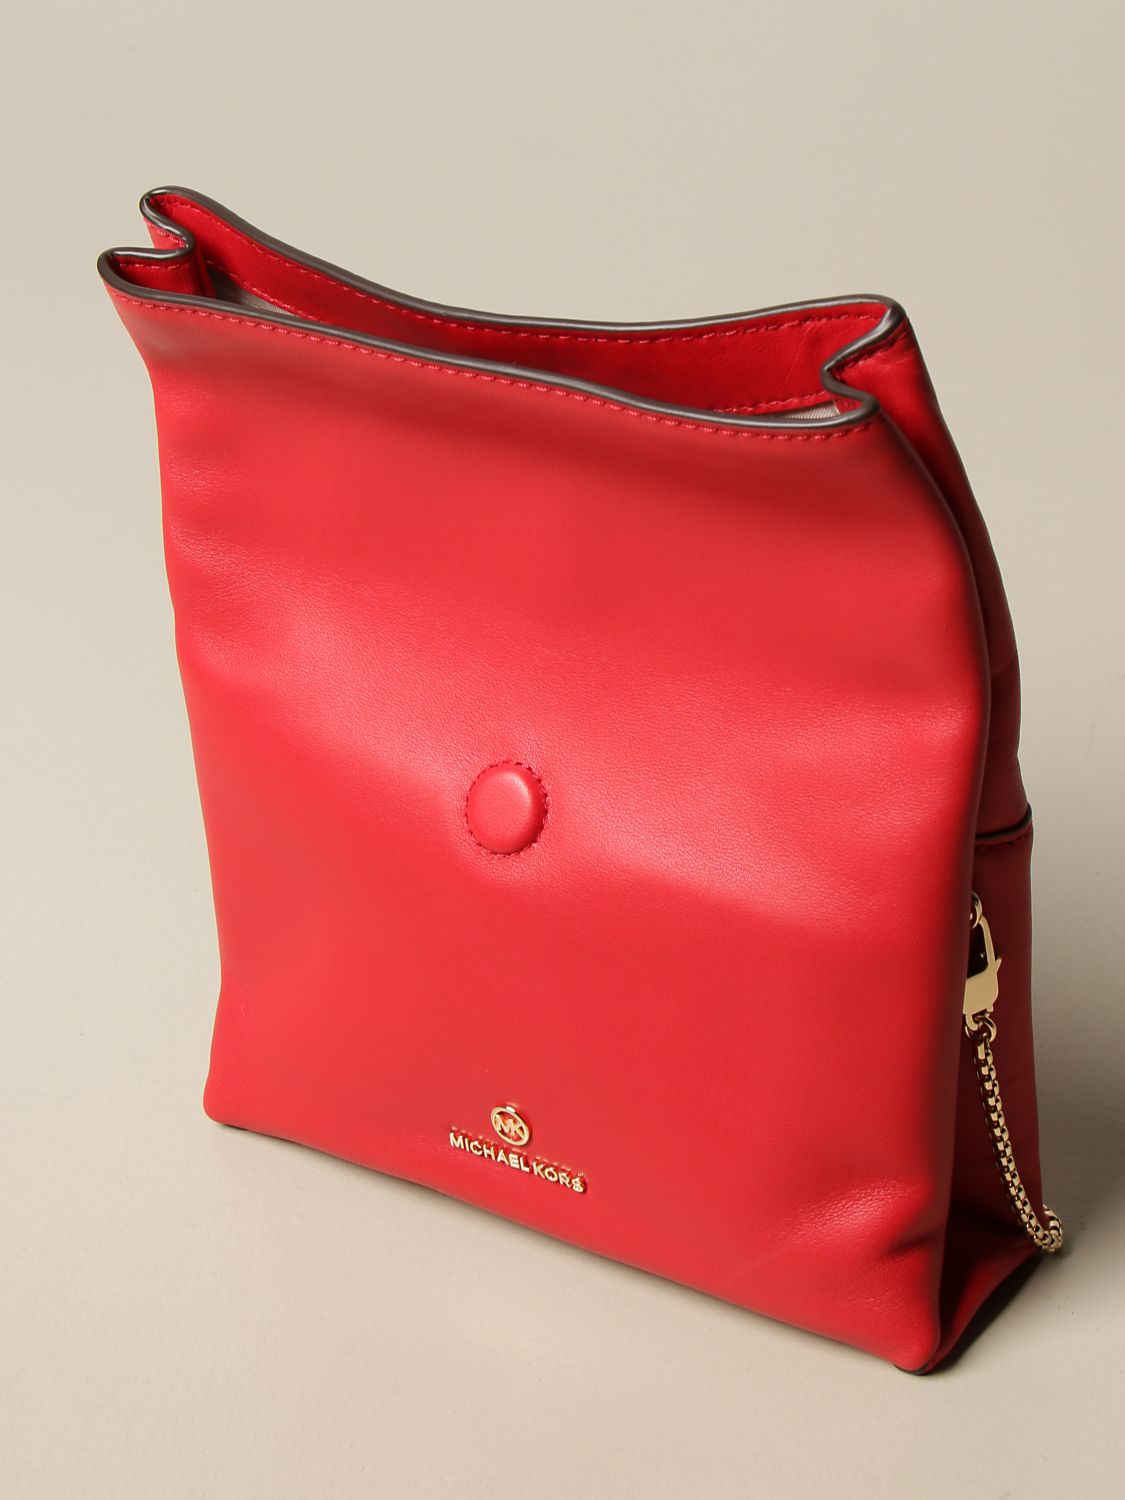 michael kors red leather bag